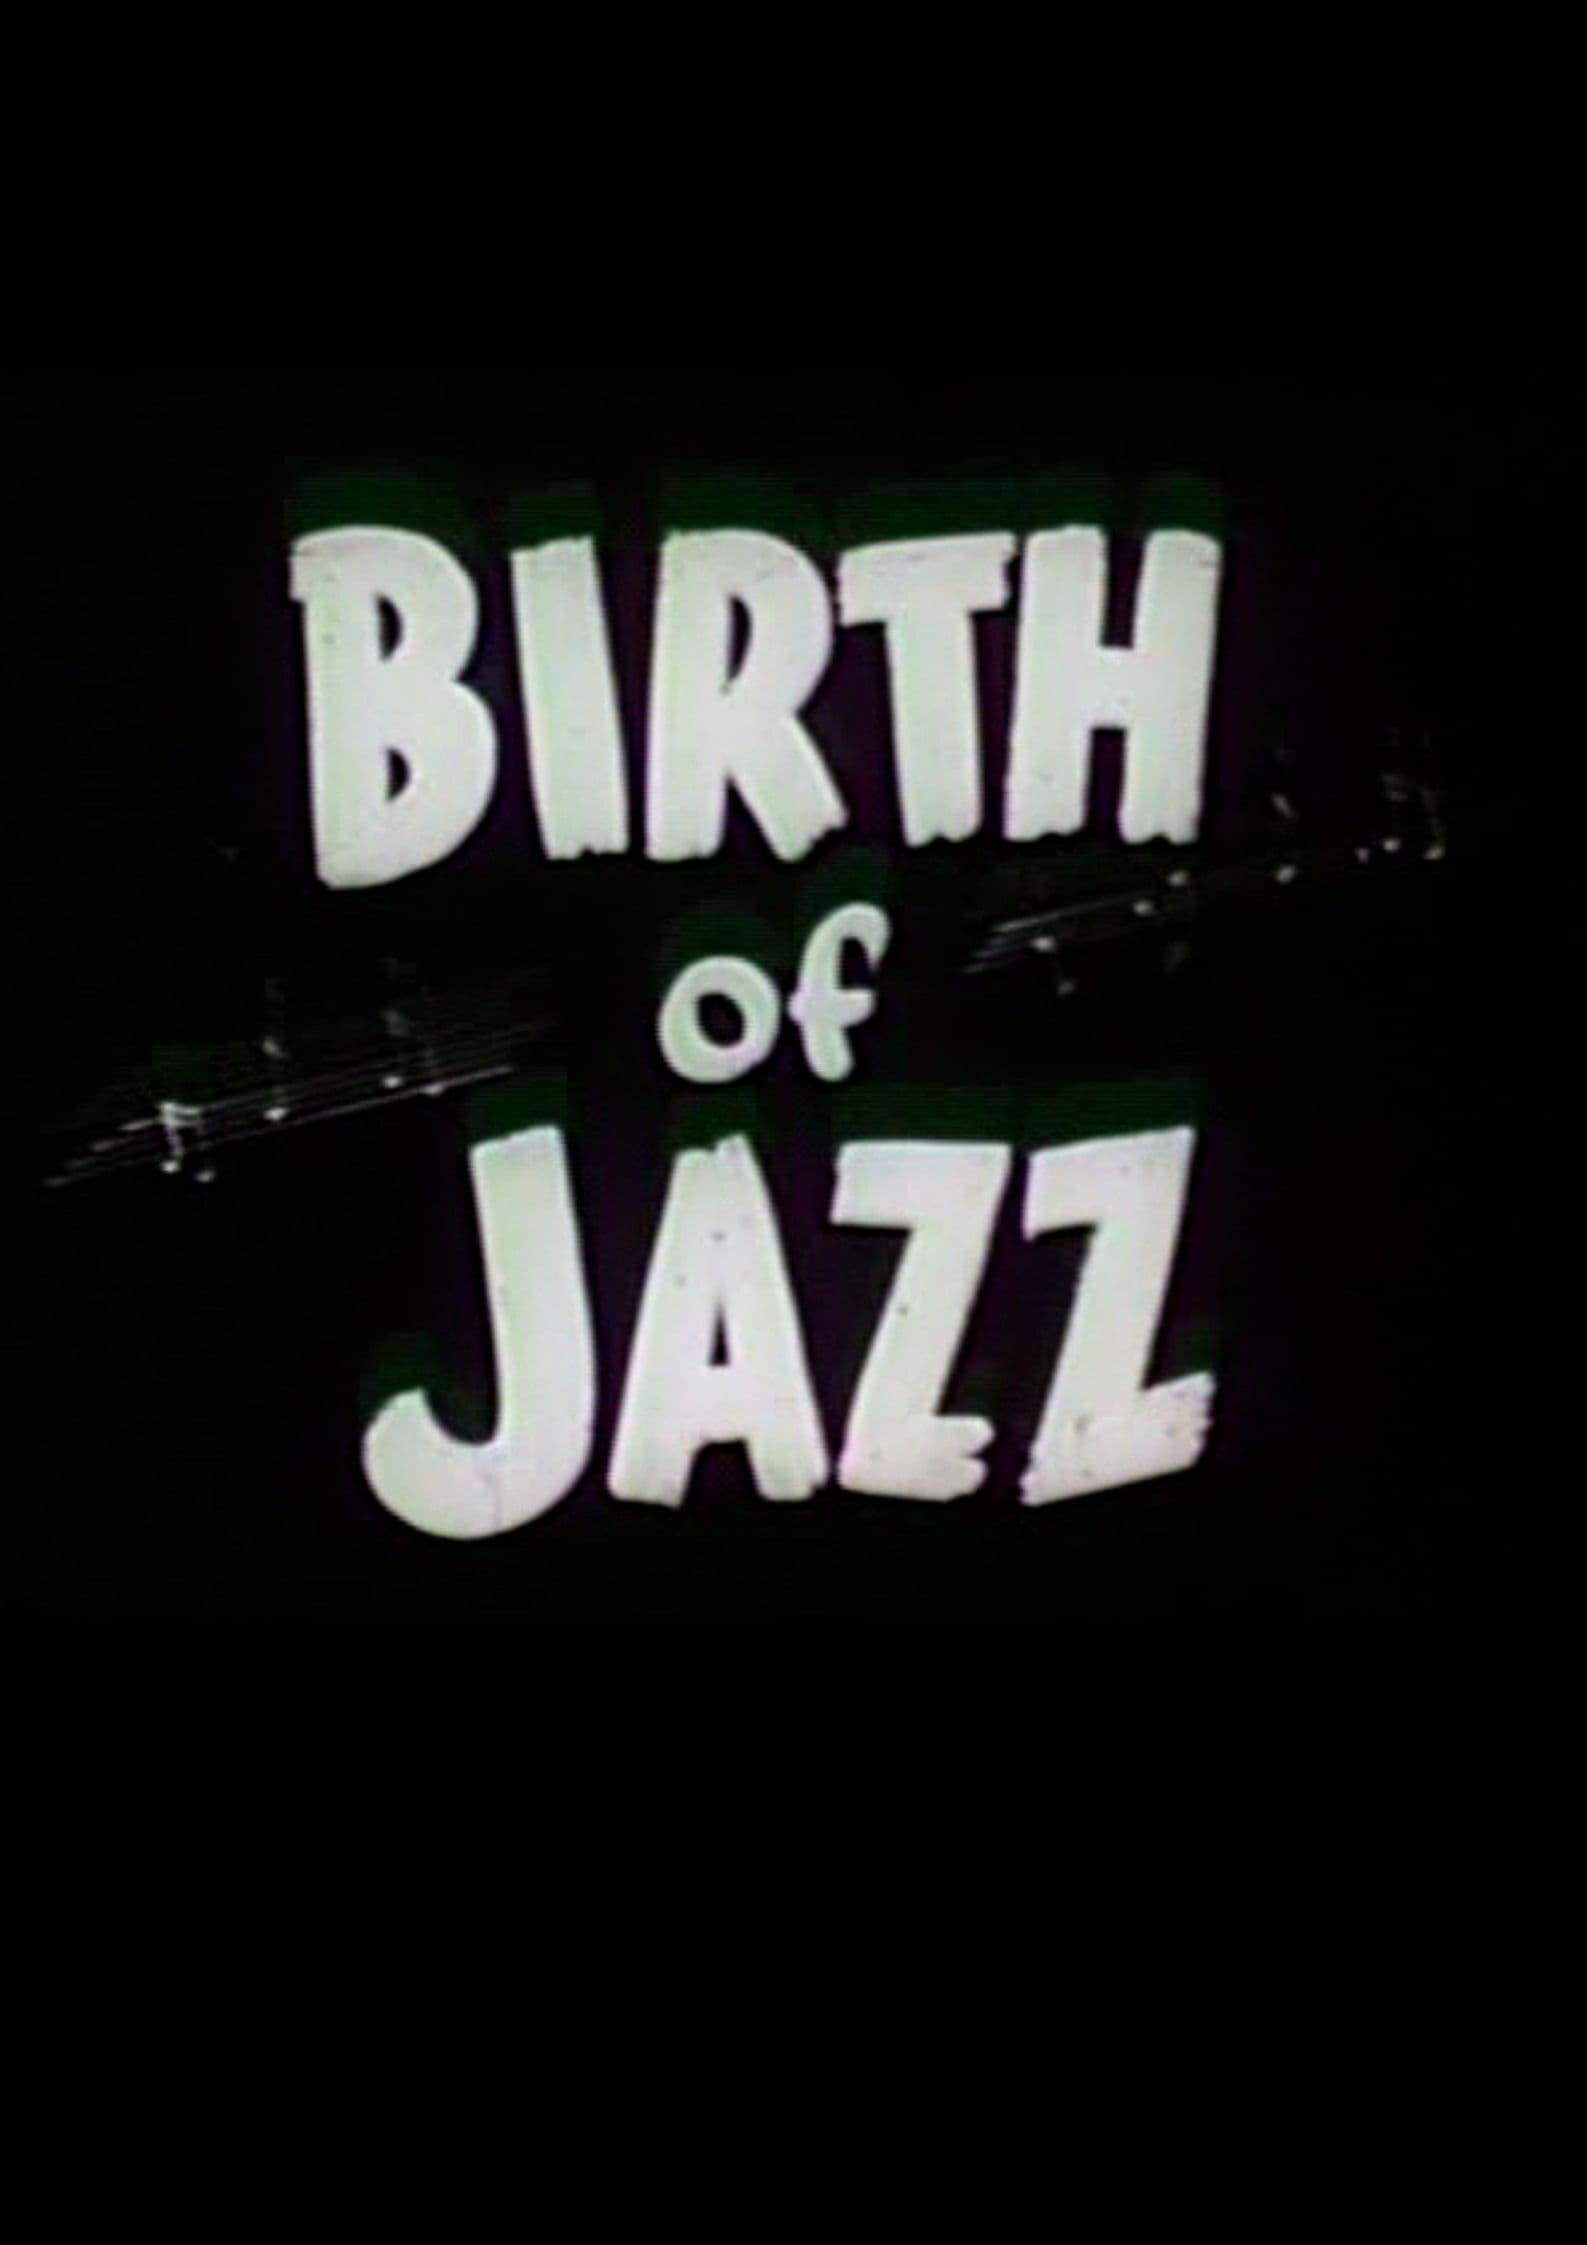 Birth of Jazz